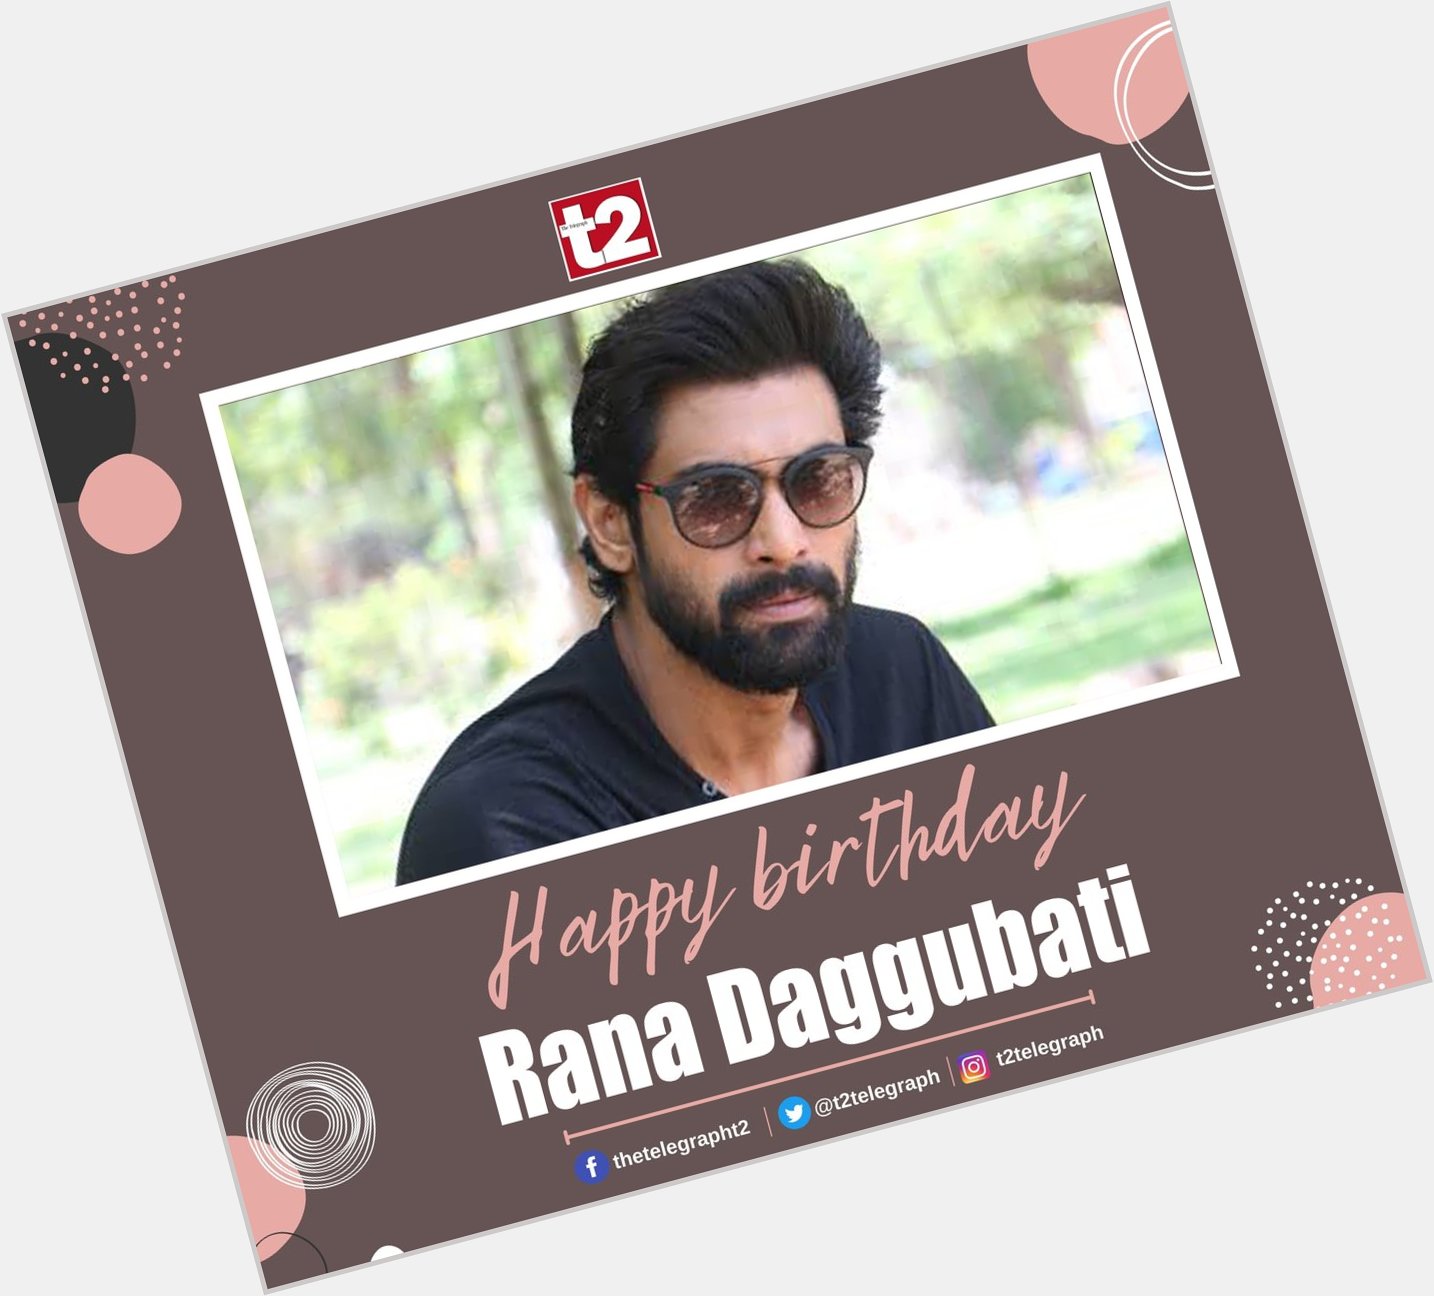 T2 wishes Rana Daggubati, the towering leading man of Telugu cinema, a very happy birthday 